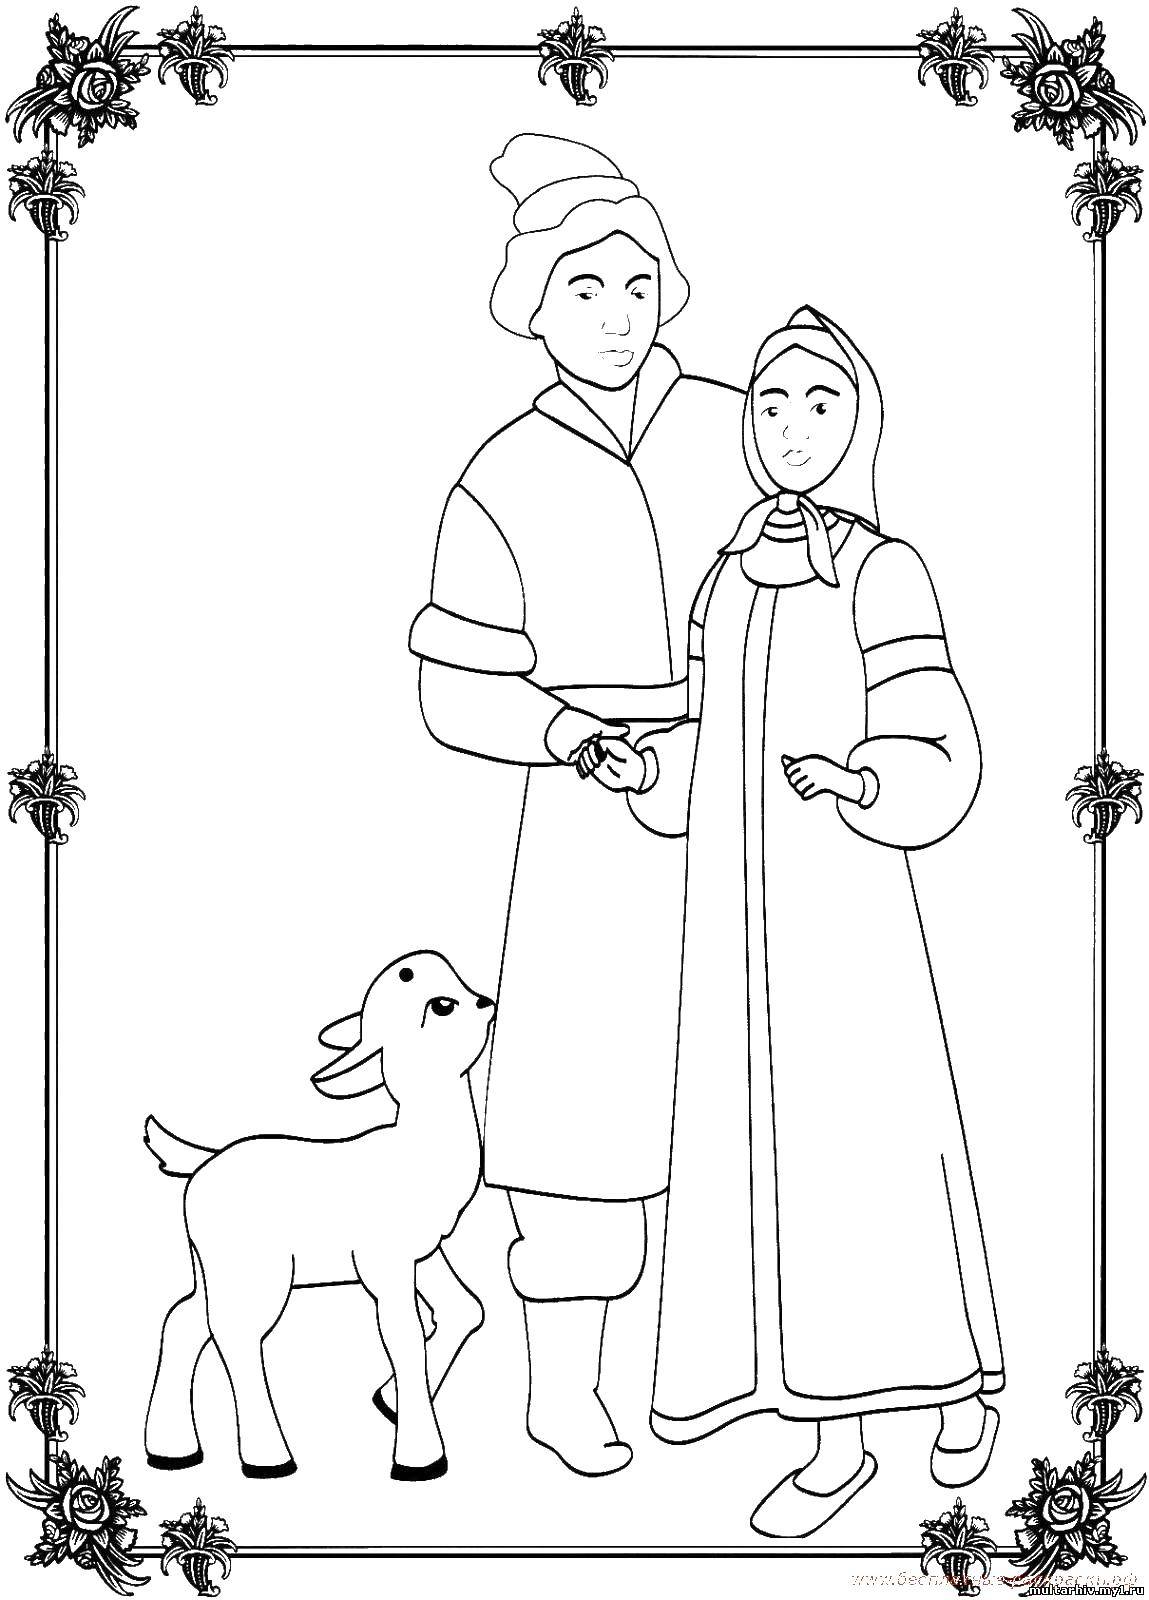 Coloring Sister Alyonushka and brother Ivanushka. Category The characters from fairy tales. Tags:  sister Alyonushka.